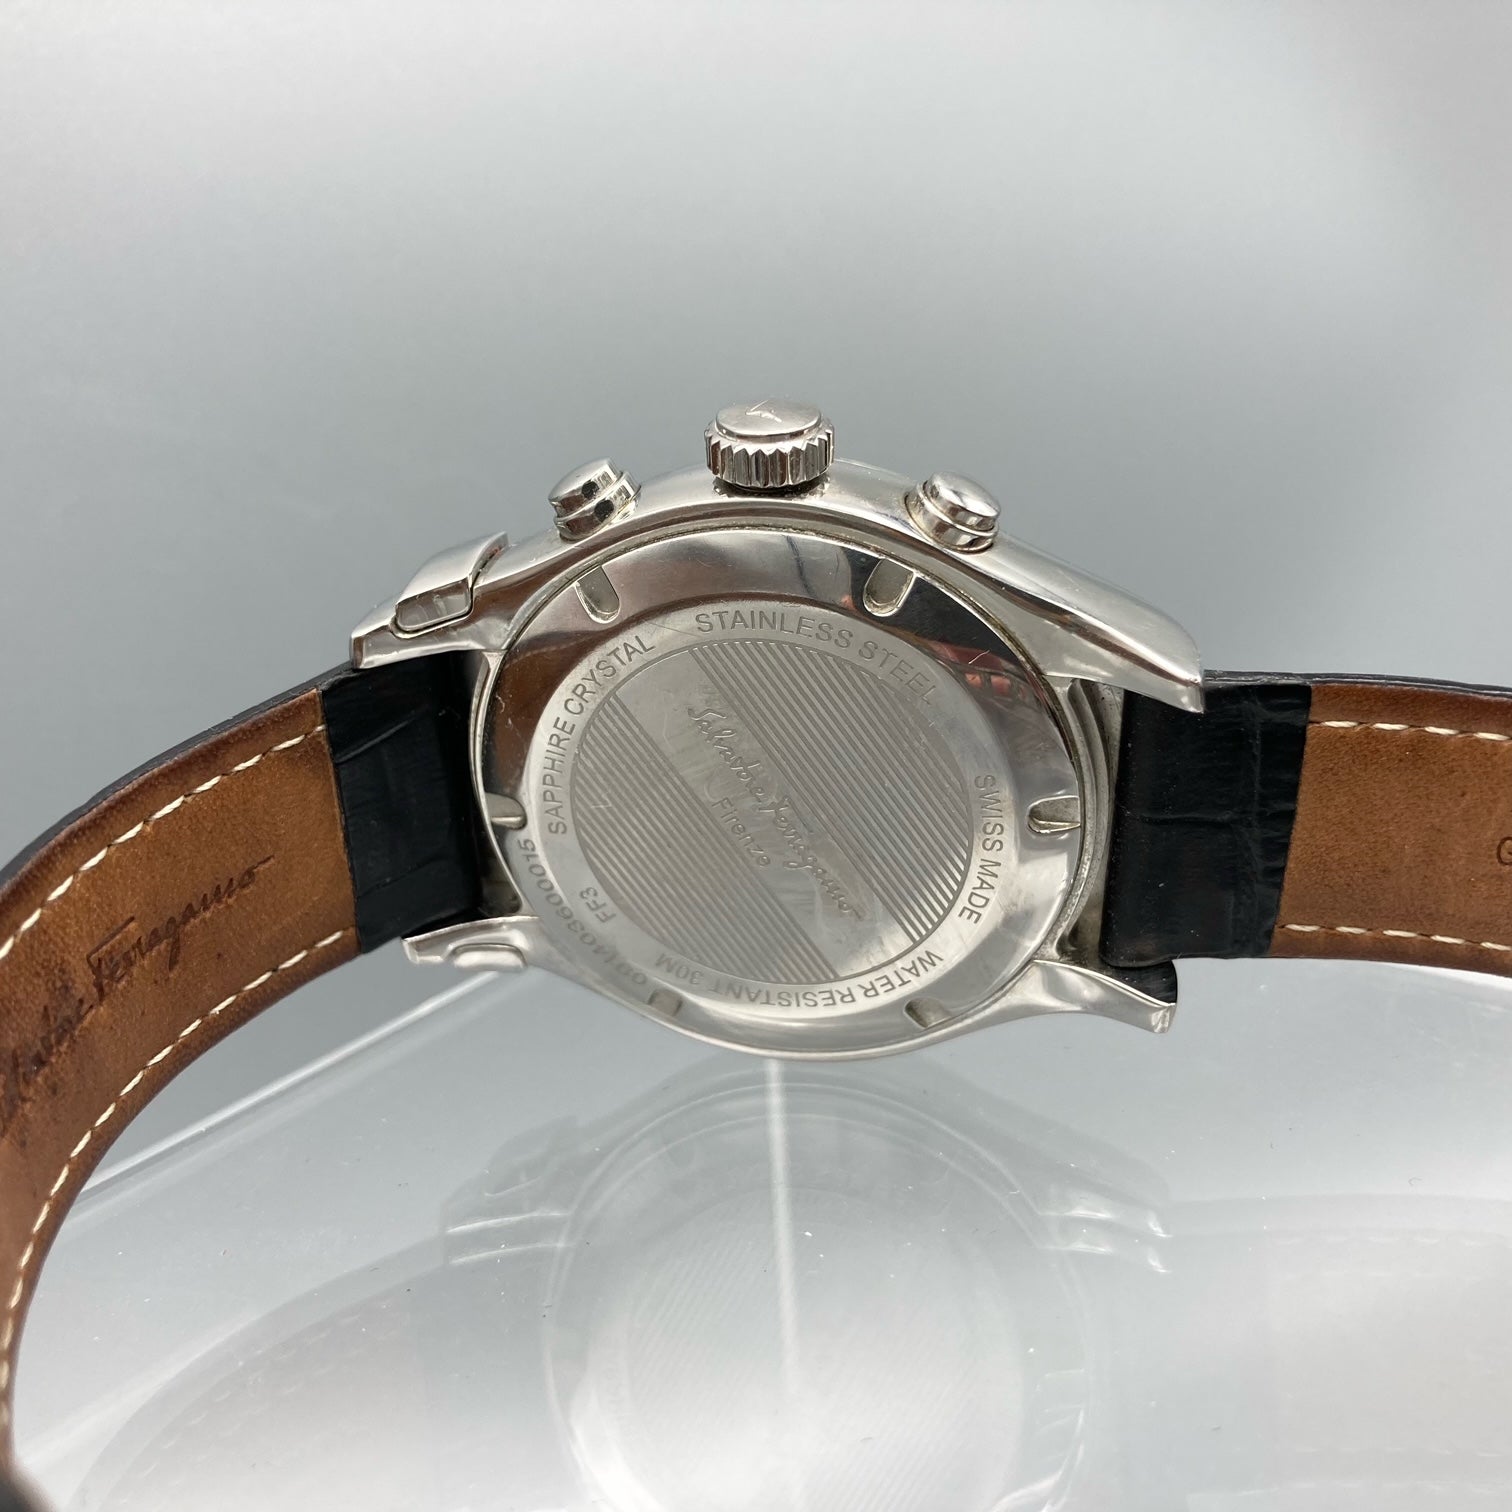 Salvatore Ferragamo Chronograph Date Quartz Watch FF3